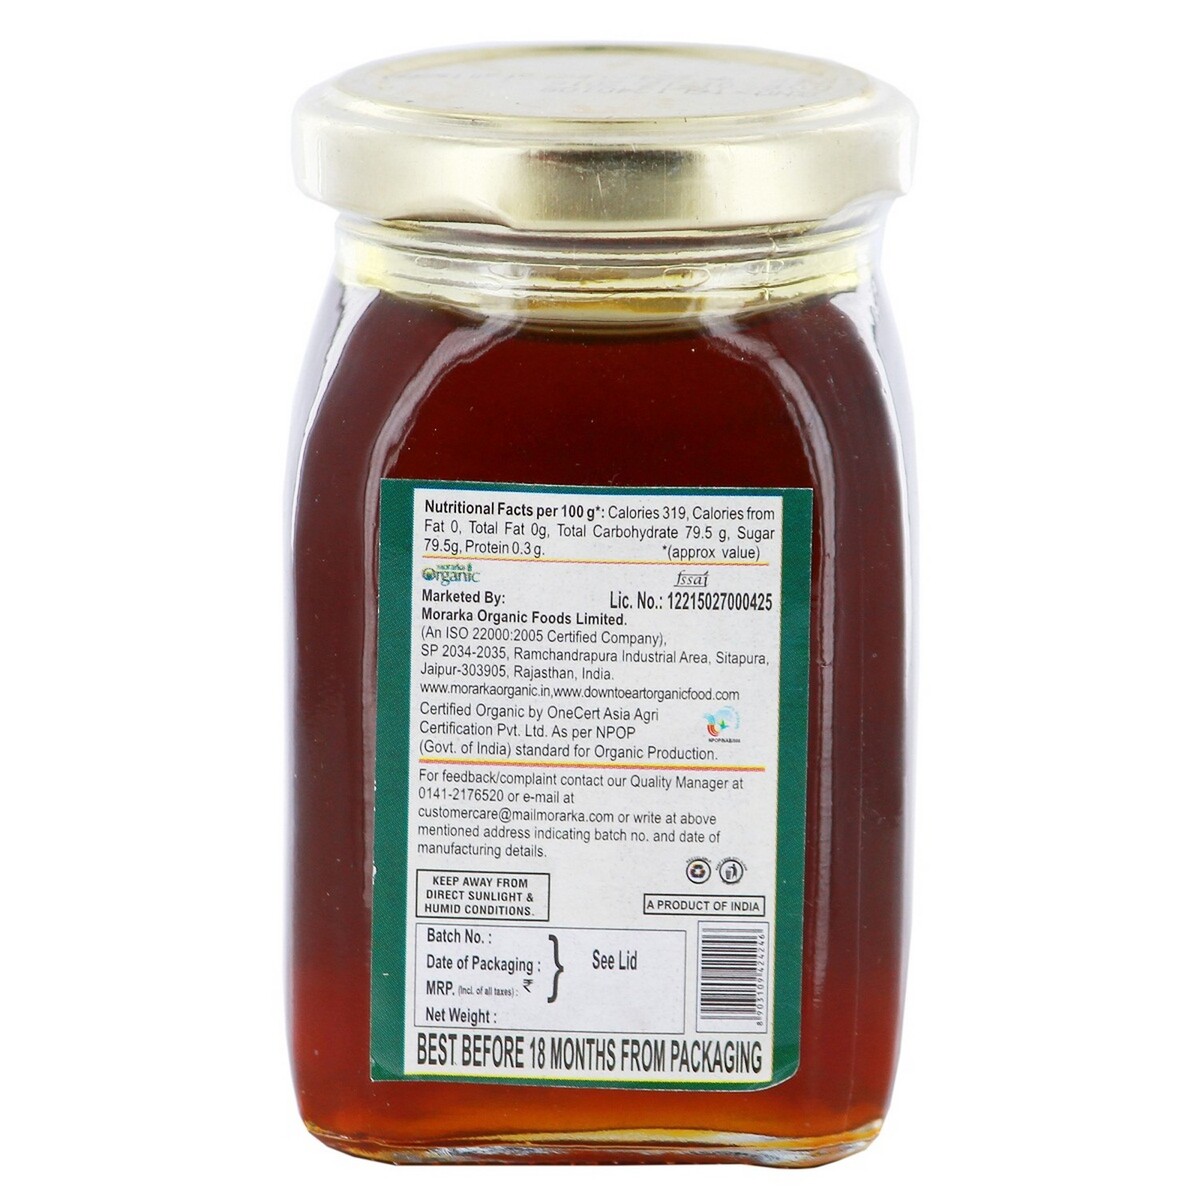 Down to Earth Organic Honey 500g